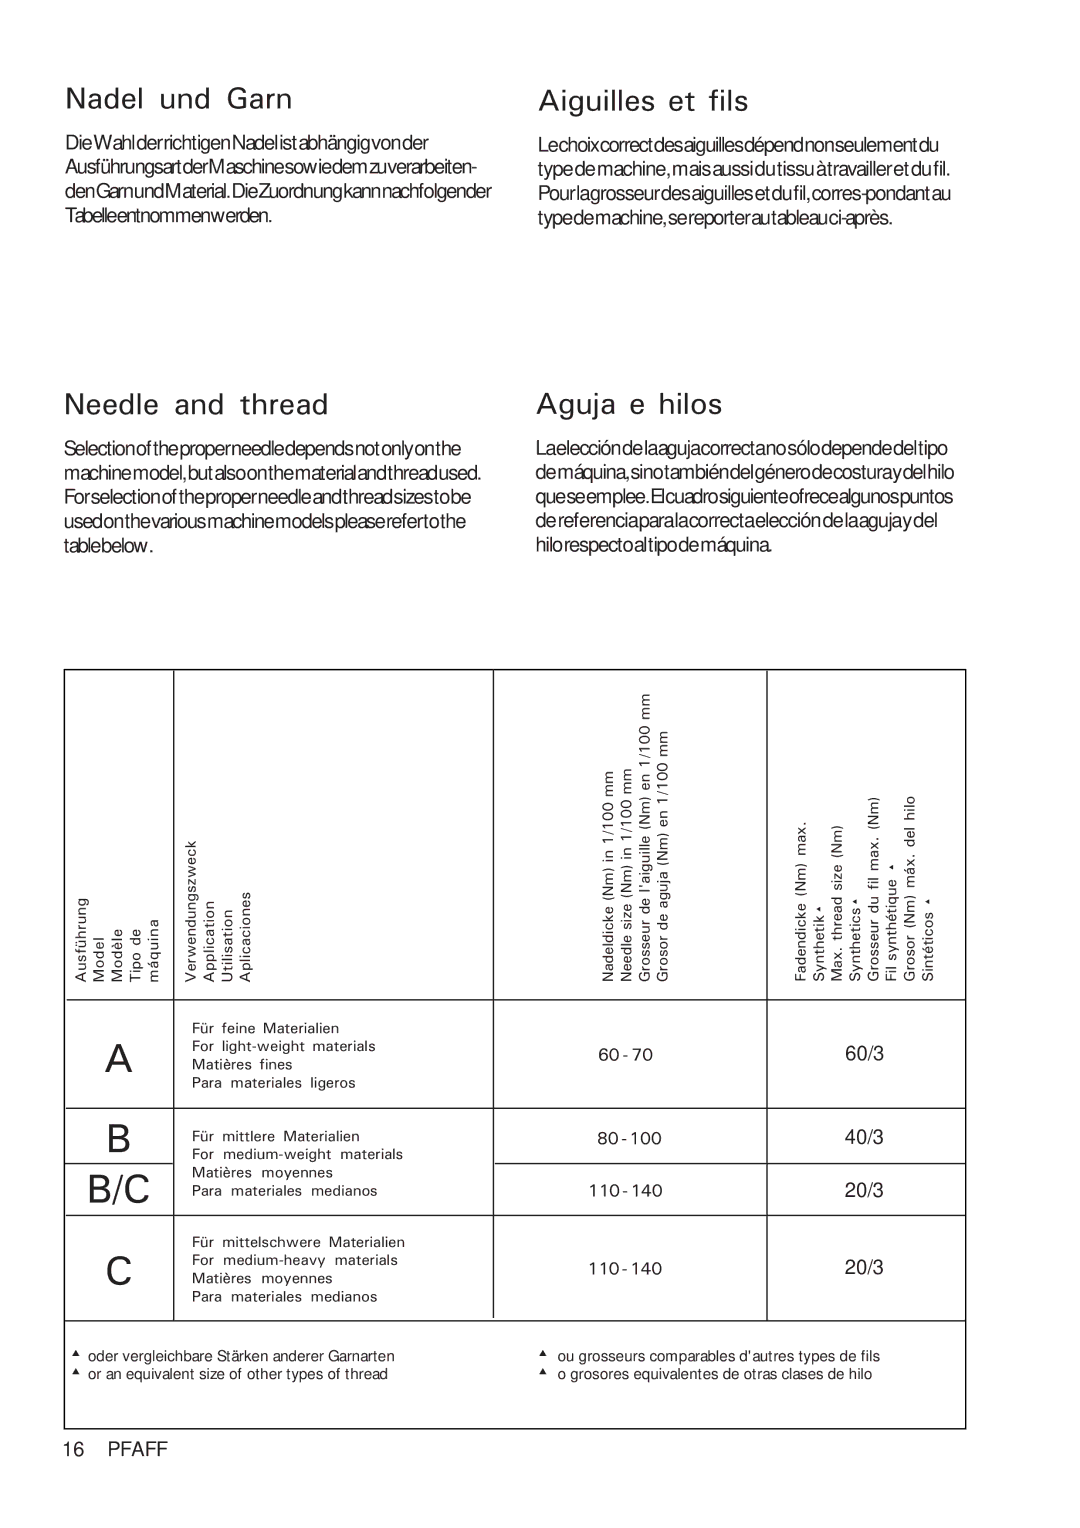 Pfaff 918 instruction manual Nadel und Garn Aiguilles et fils, Needle and thread Aguja e hilos 